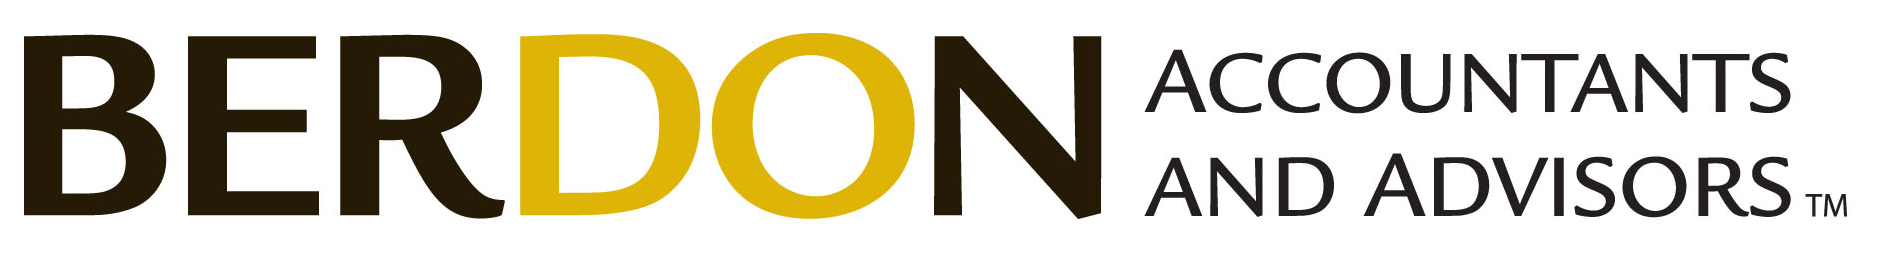 berdon logo